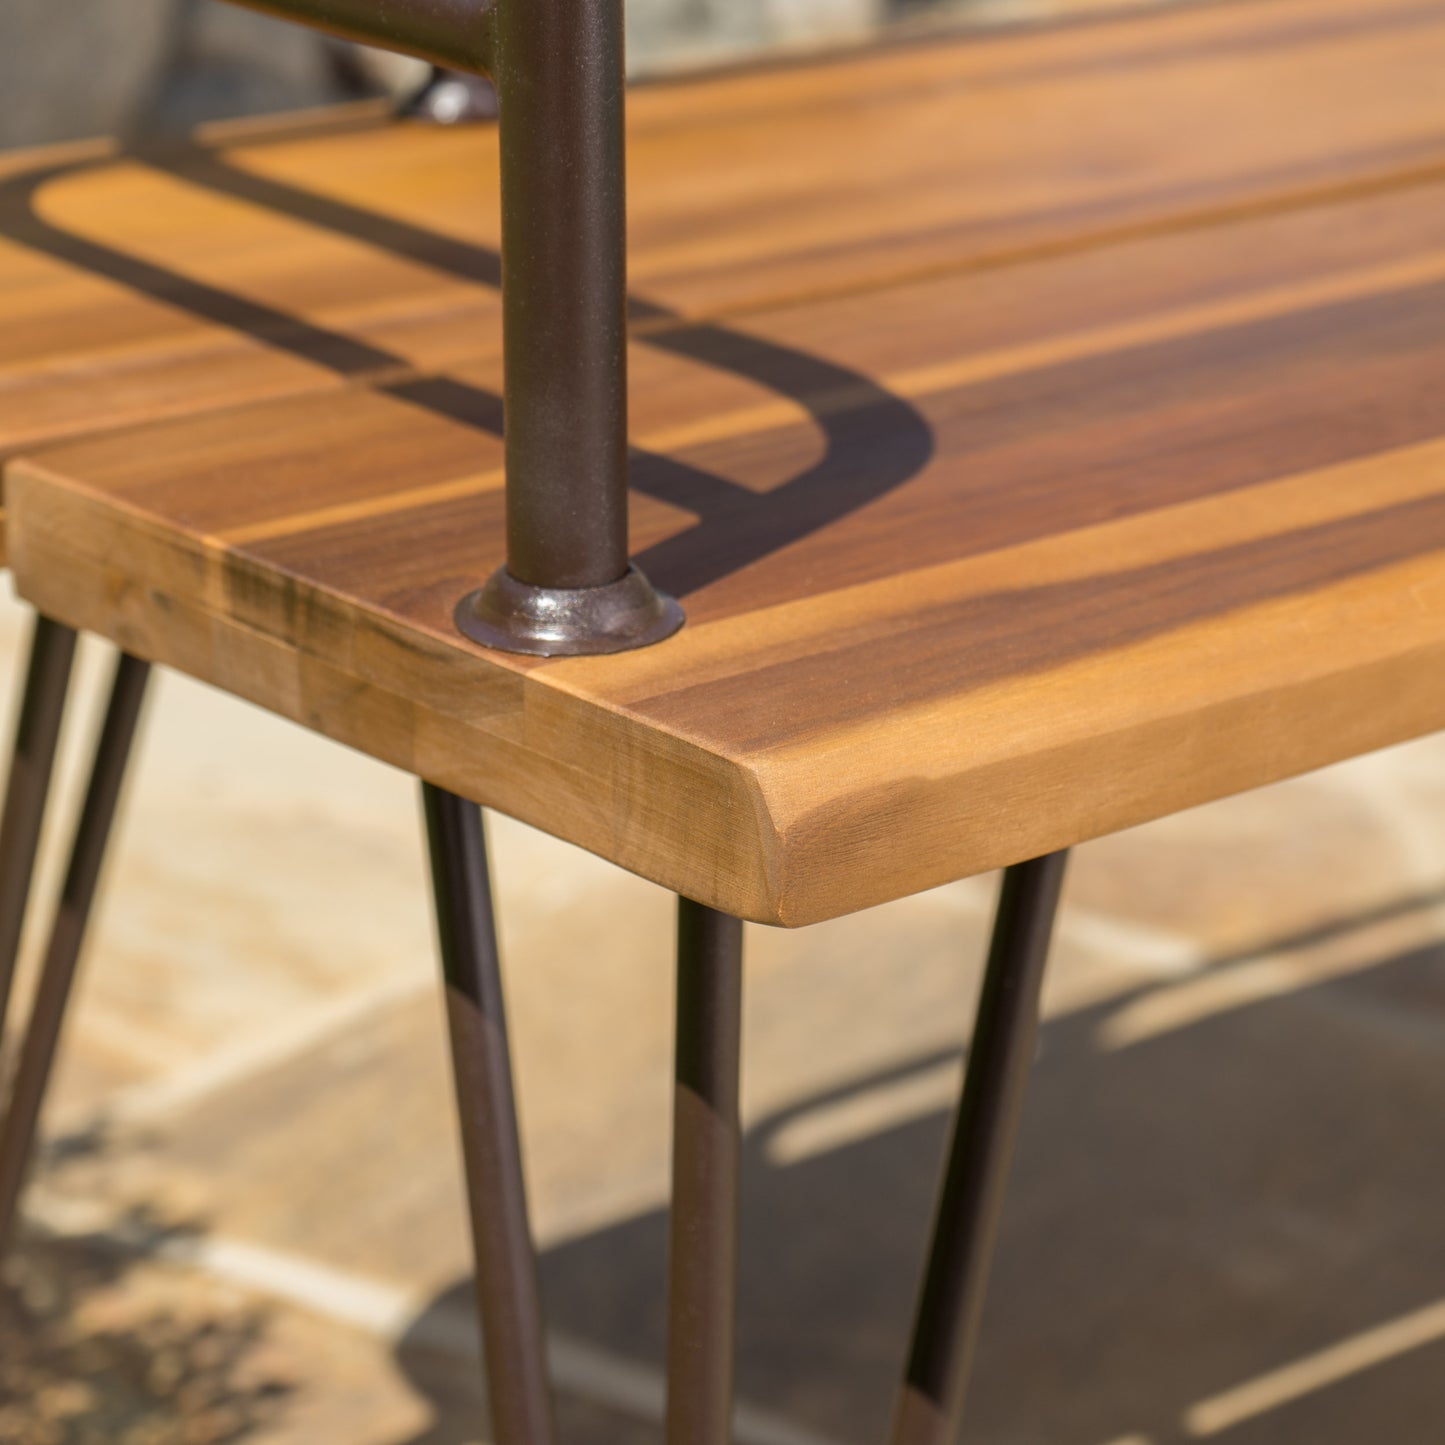 Avy Outdoor Rustic Industrial Acacia Wood Bench with Metal Hairpin Legs, Teak